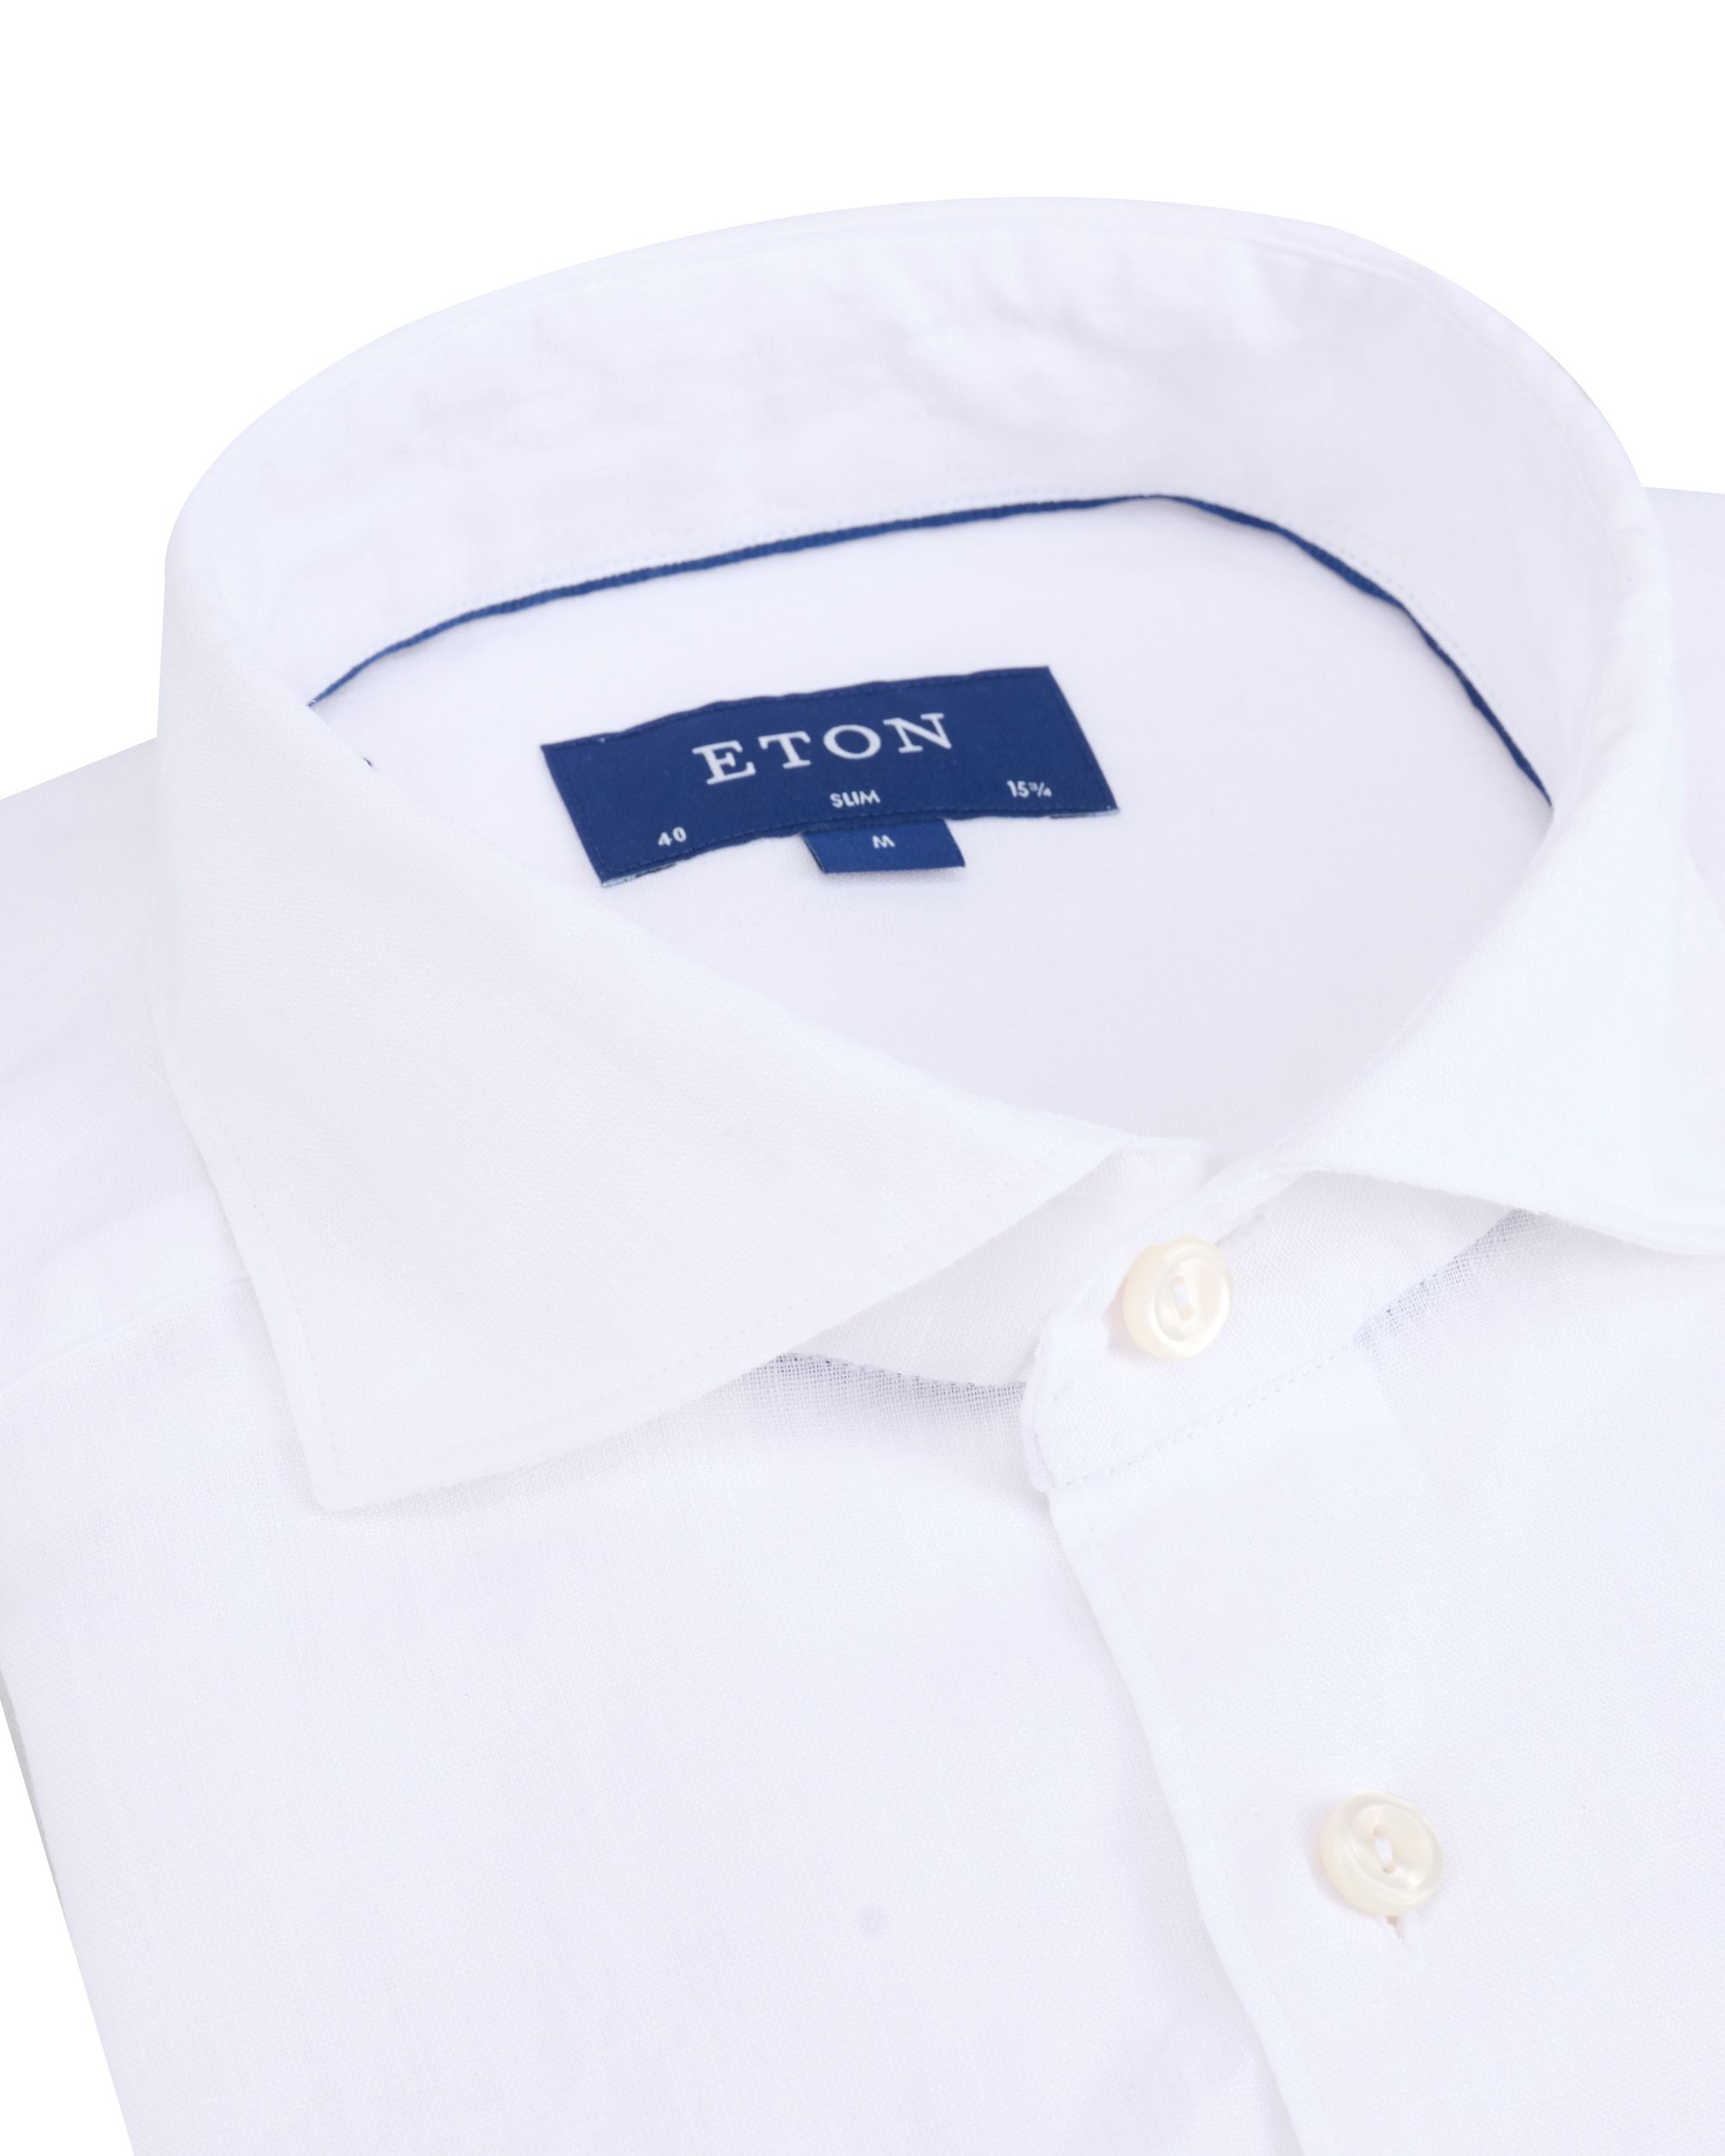 ETON Overhemd LM Wit 091981-001-39